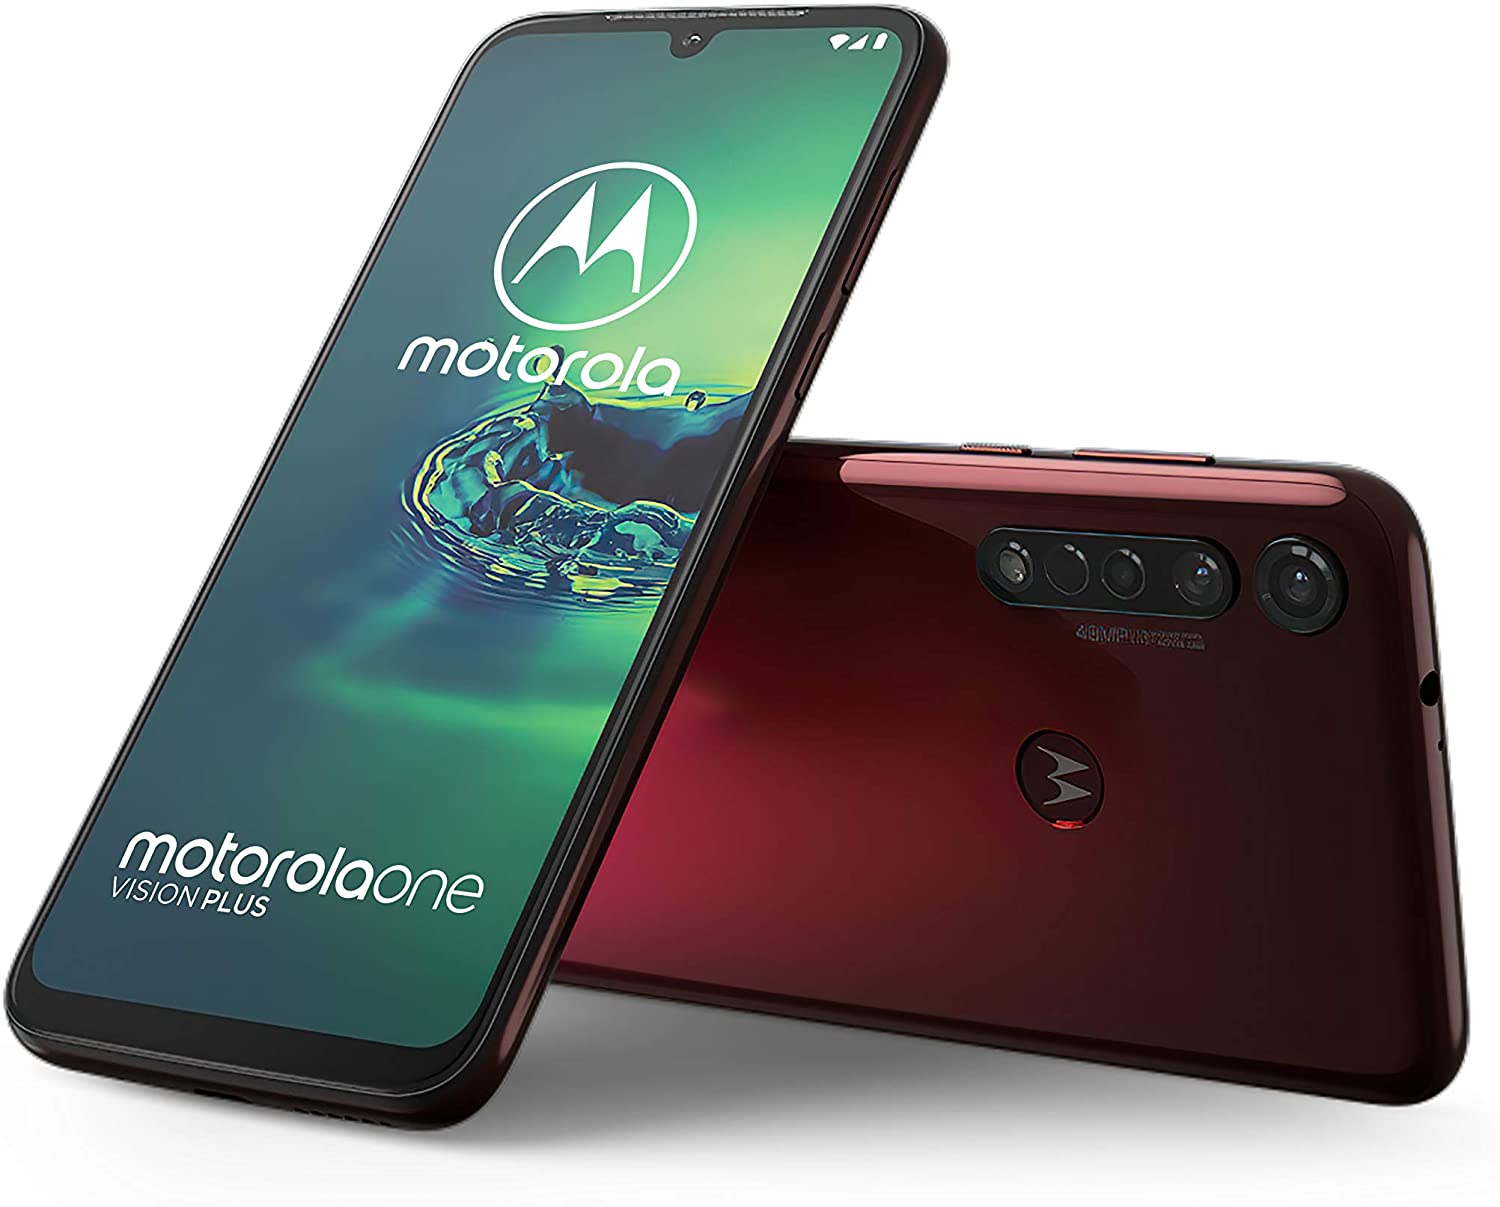 Motorola One Vision Plus smartphone